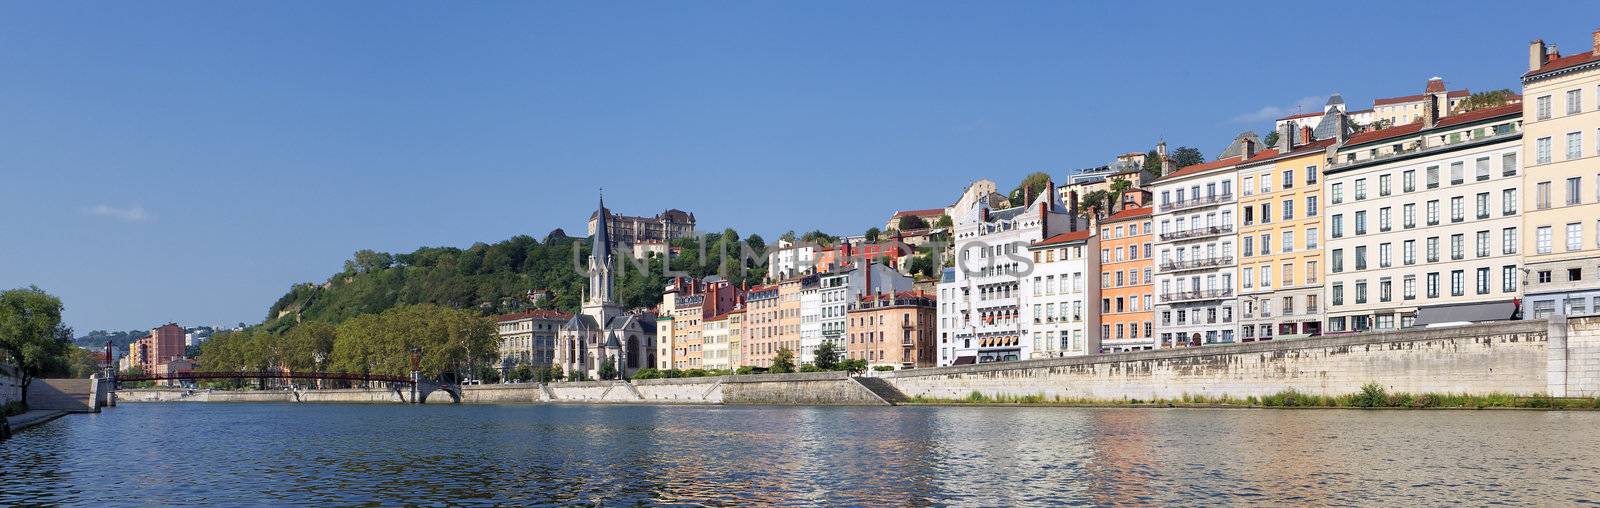 Panoramic View of Vieux Lyon by vwalakte